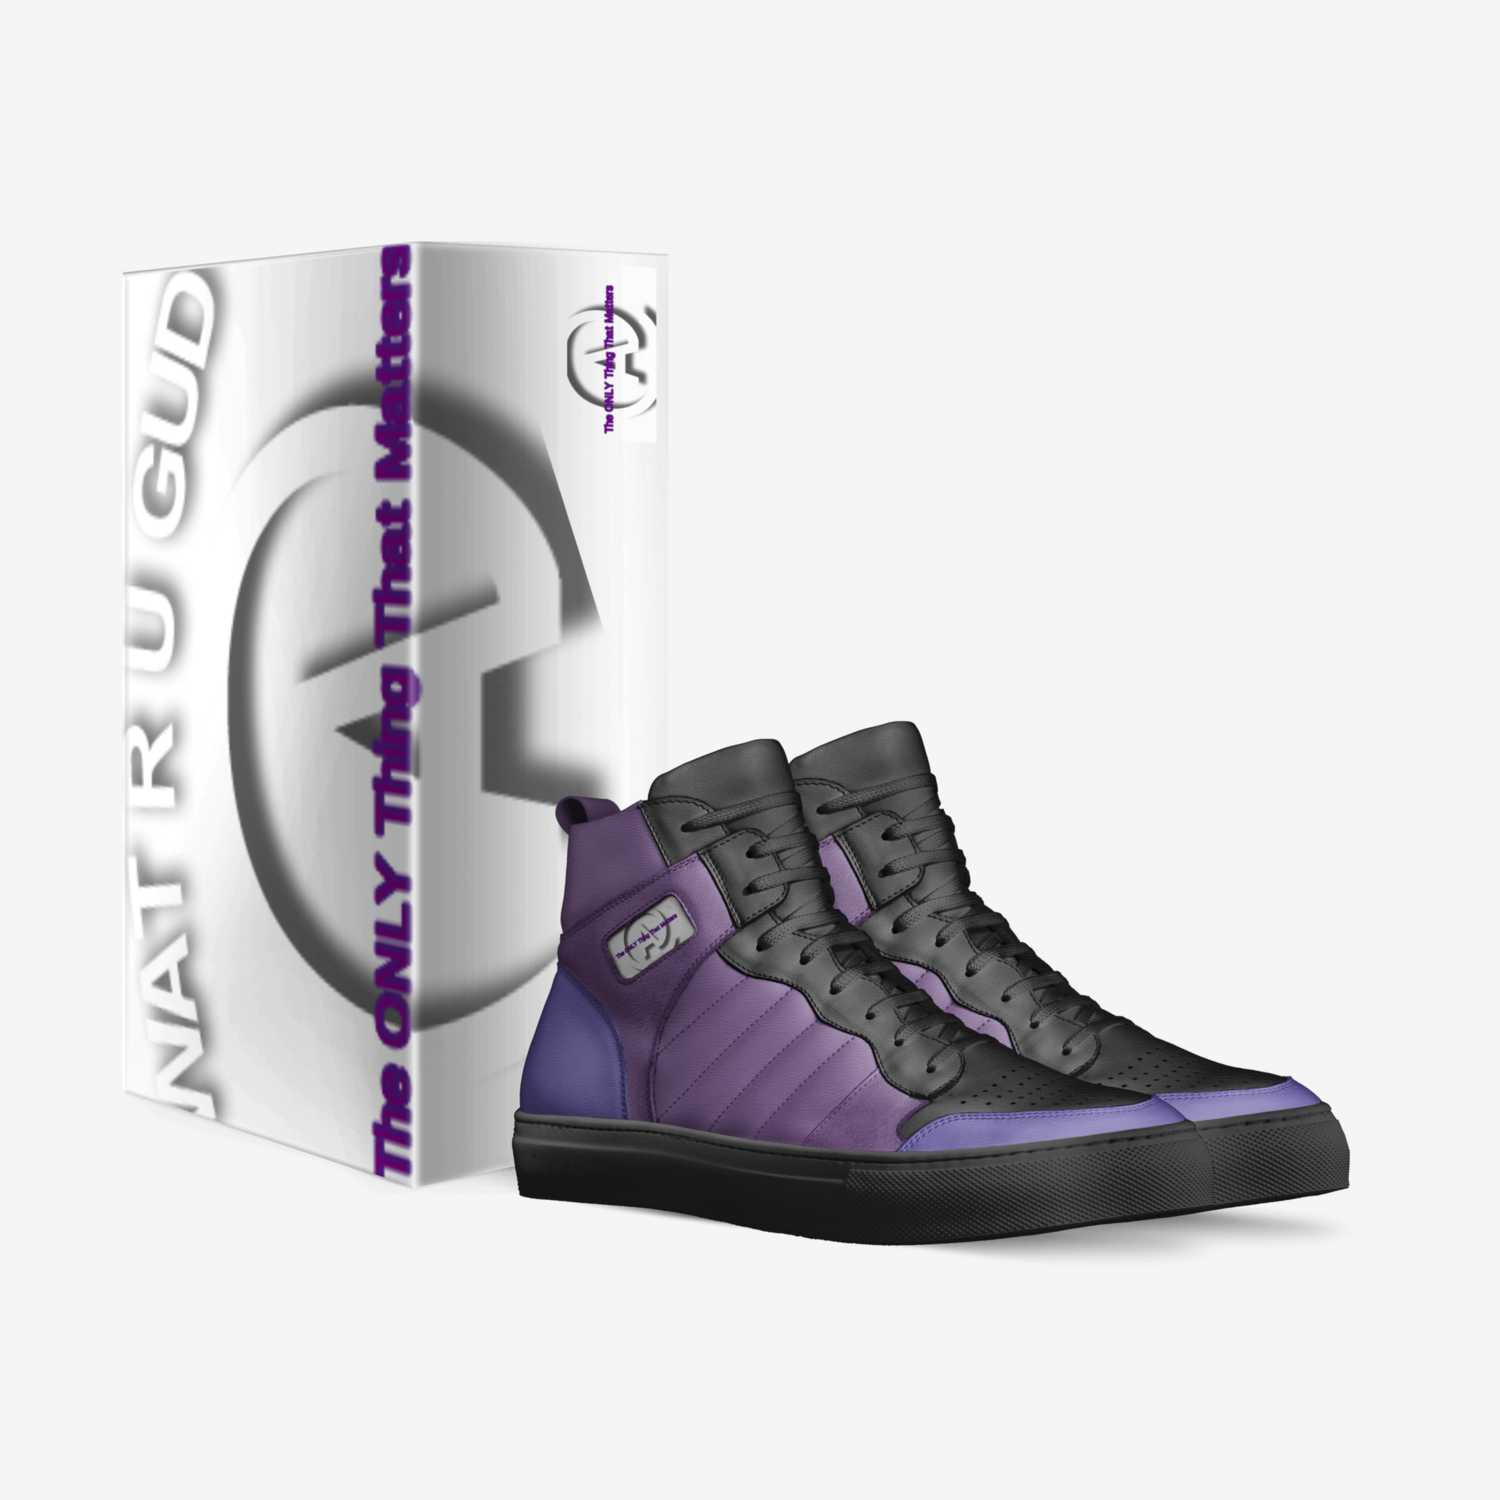 !LLT€k*®!πGL€∆d£®™ custom made in Italy shoes by Dr. Watrugudat | Box view